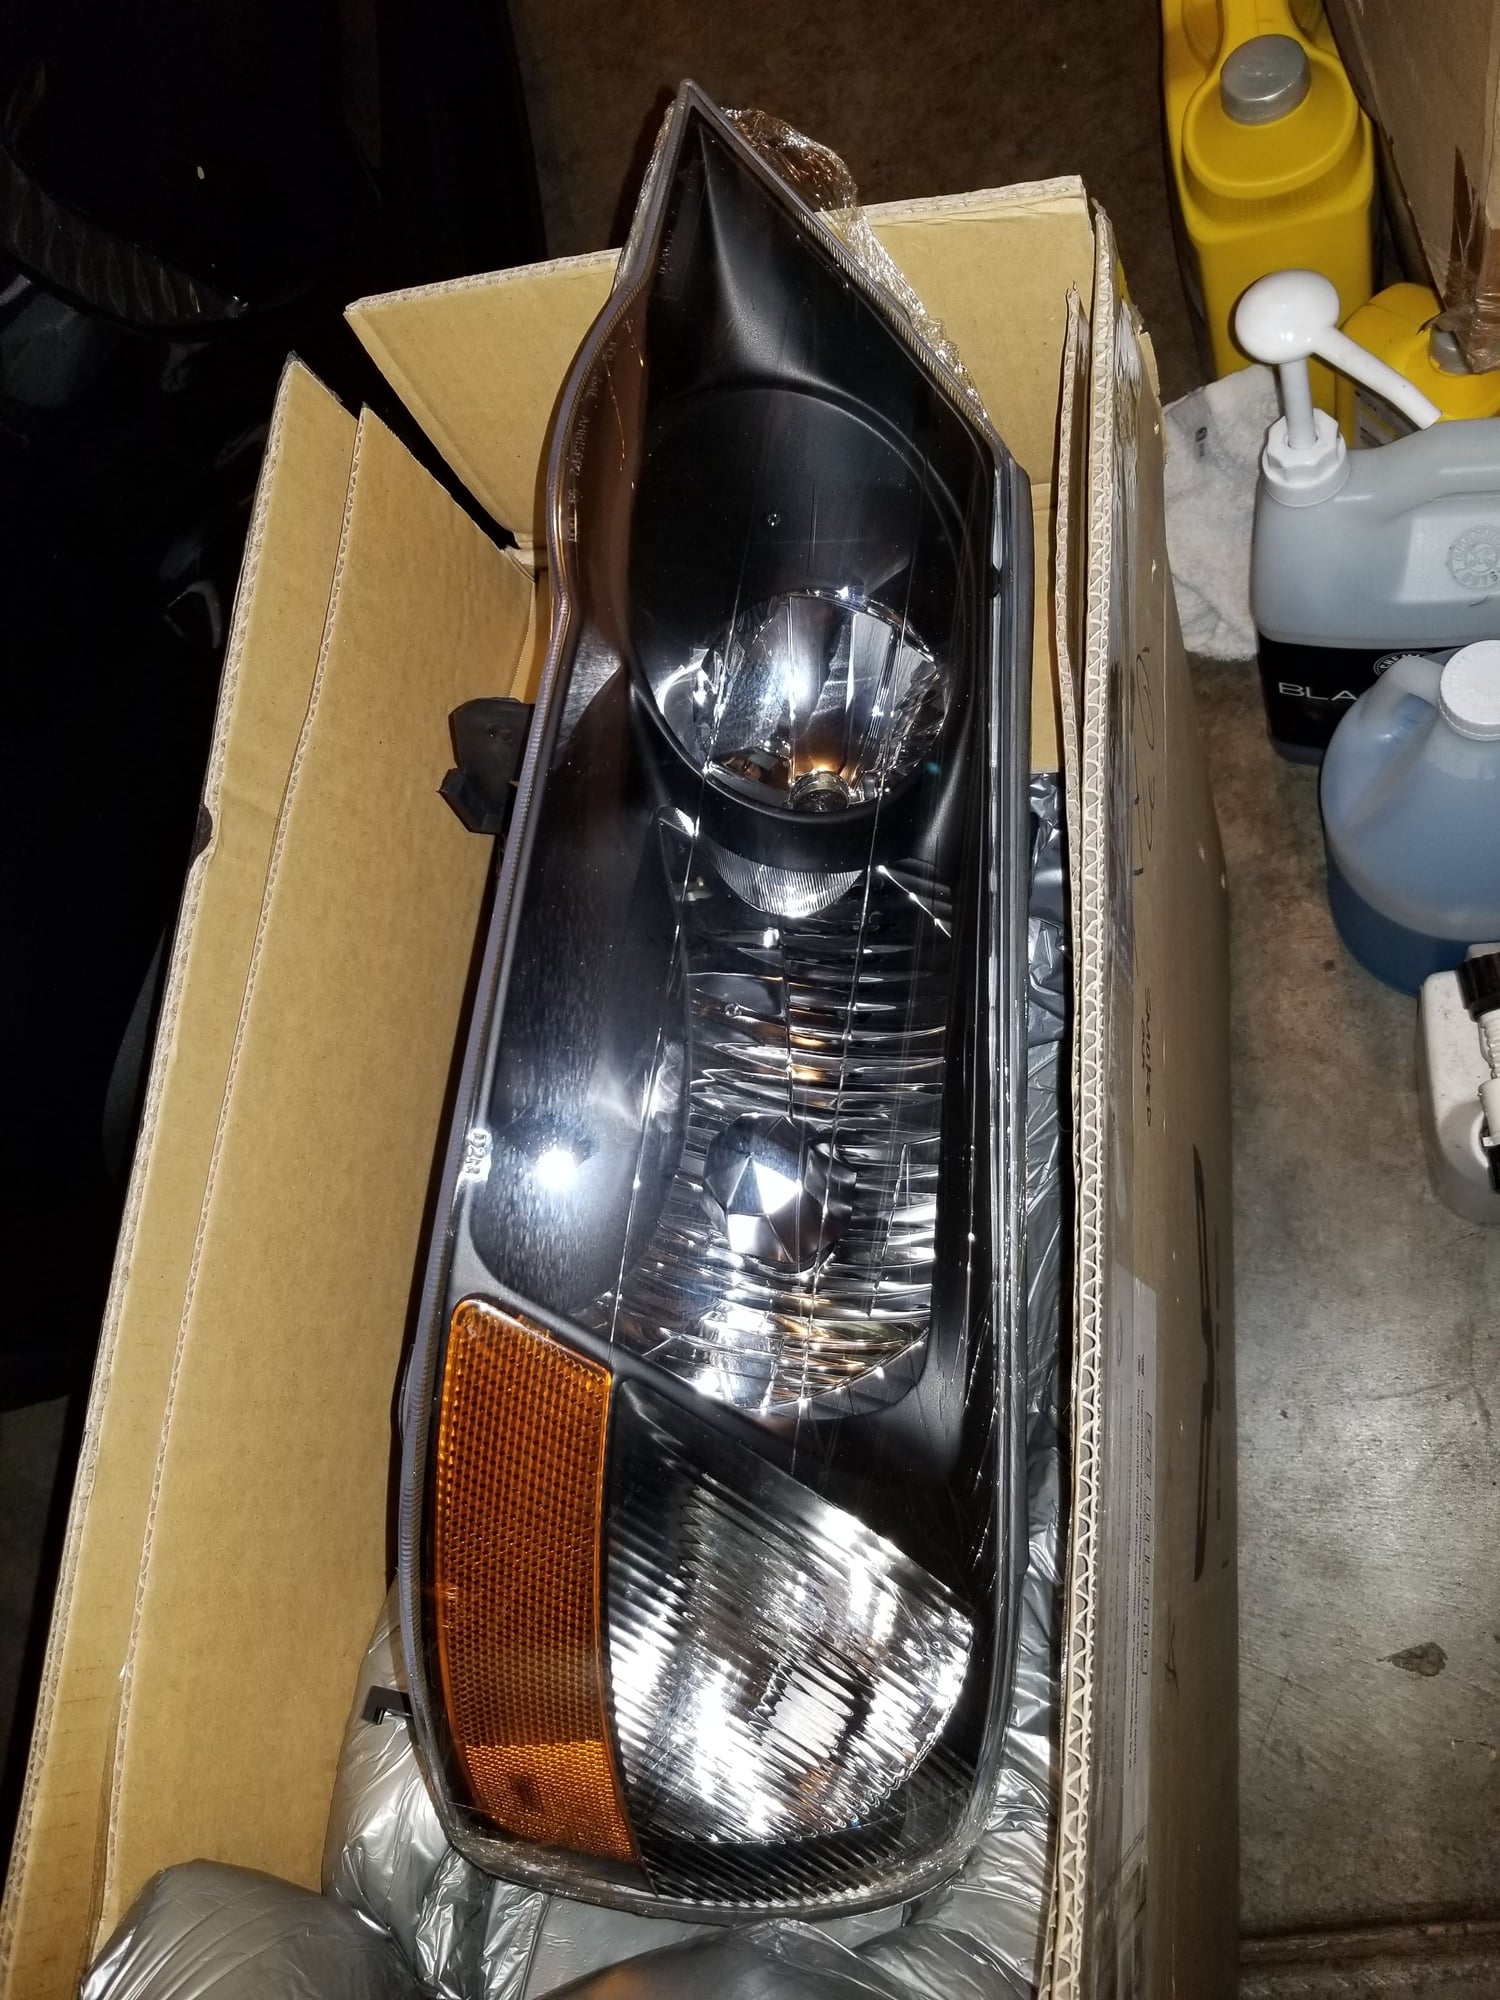 Lights - FS: 2G Type-S Headlights - New - Temecula, CA 92592, United States